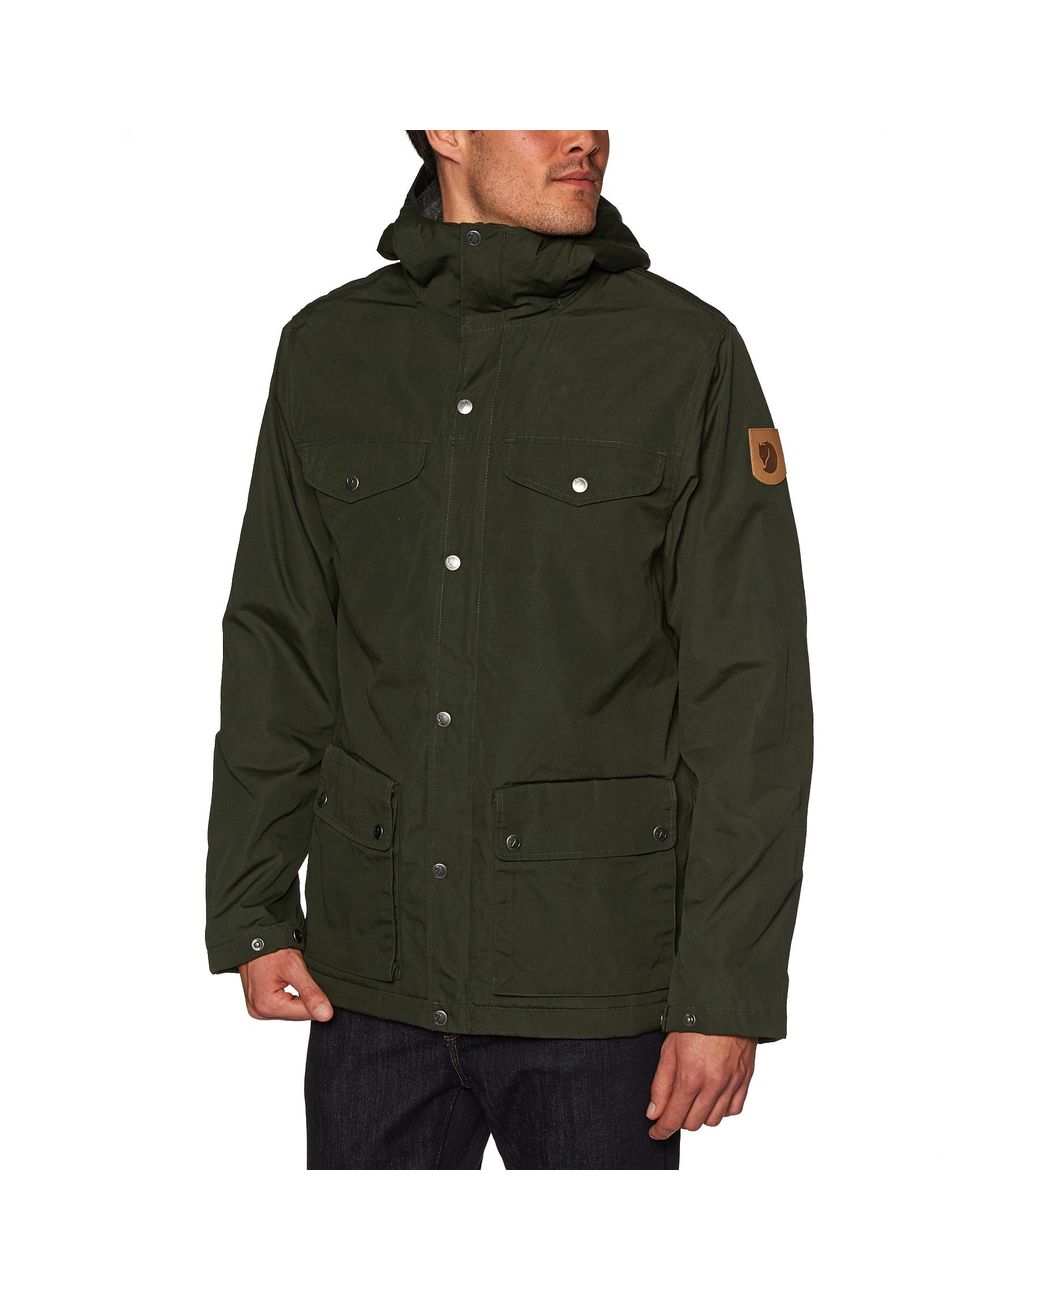 Fjallraven Greenland Winter Jacket for Men - Lyst